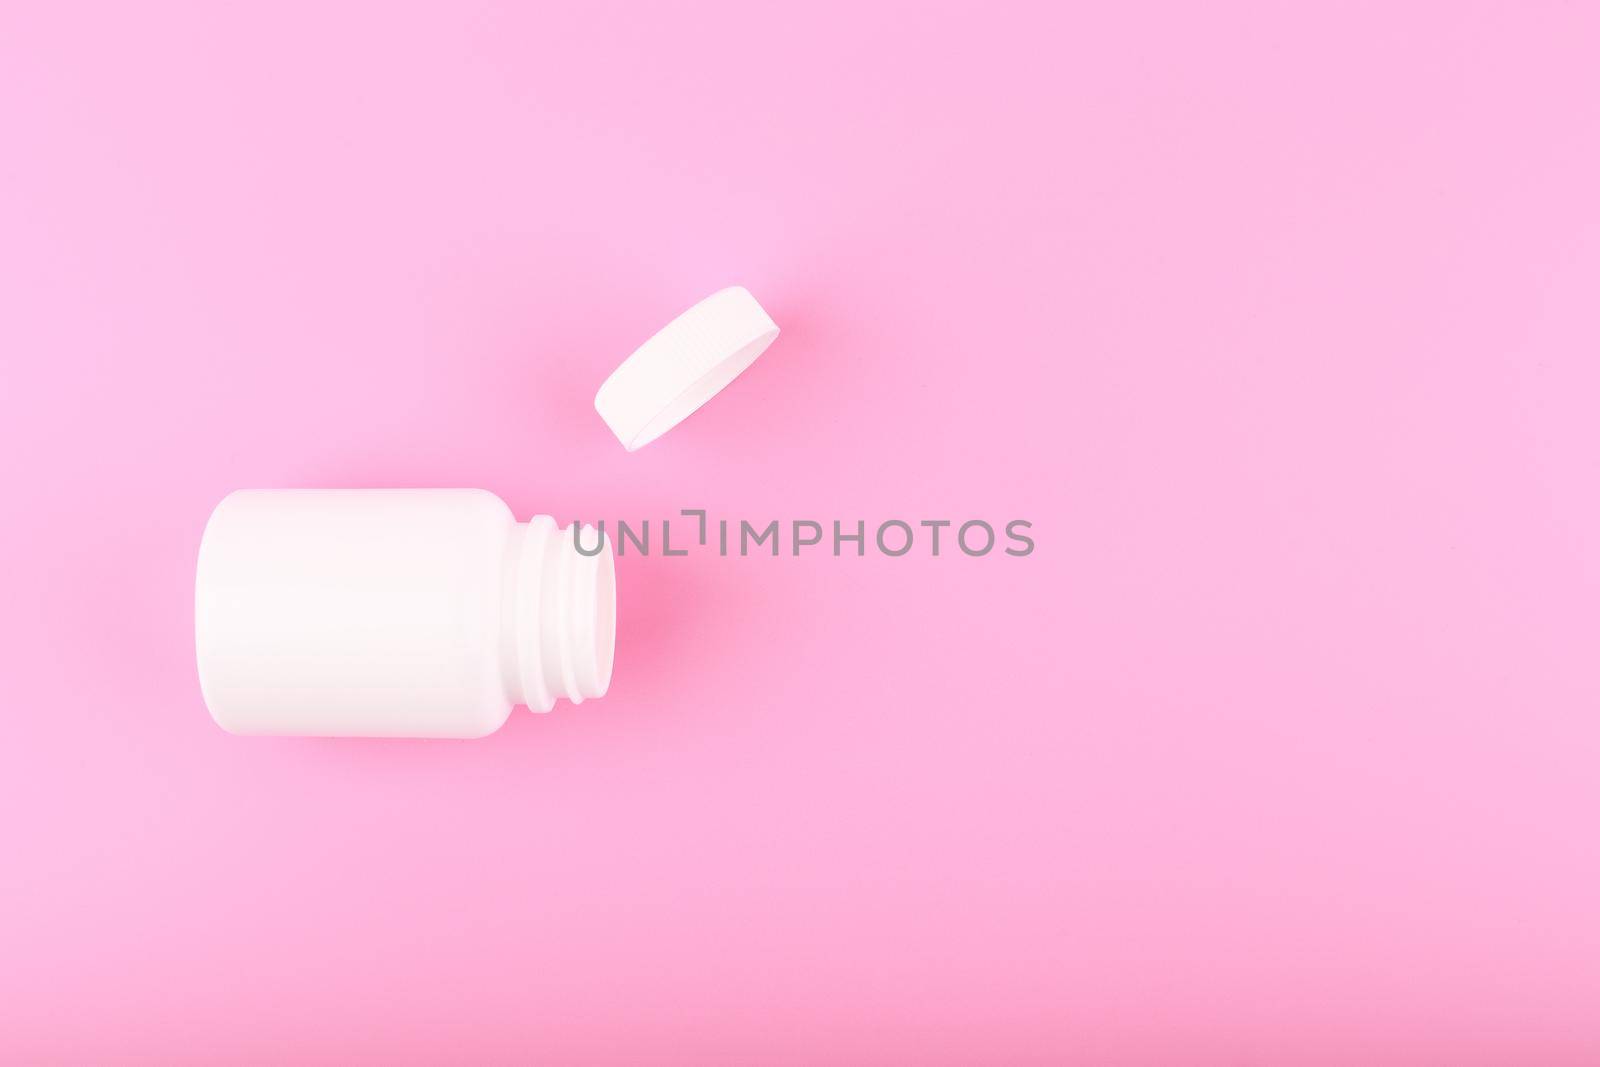 Flat lay with white opened medication bottle on saturated pink background by Senorina_Irina